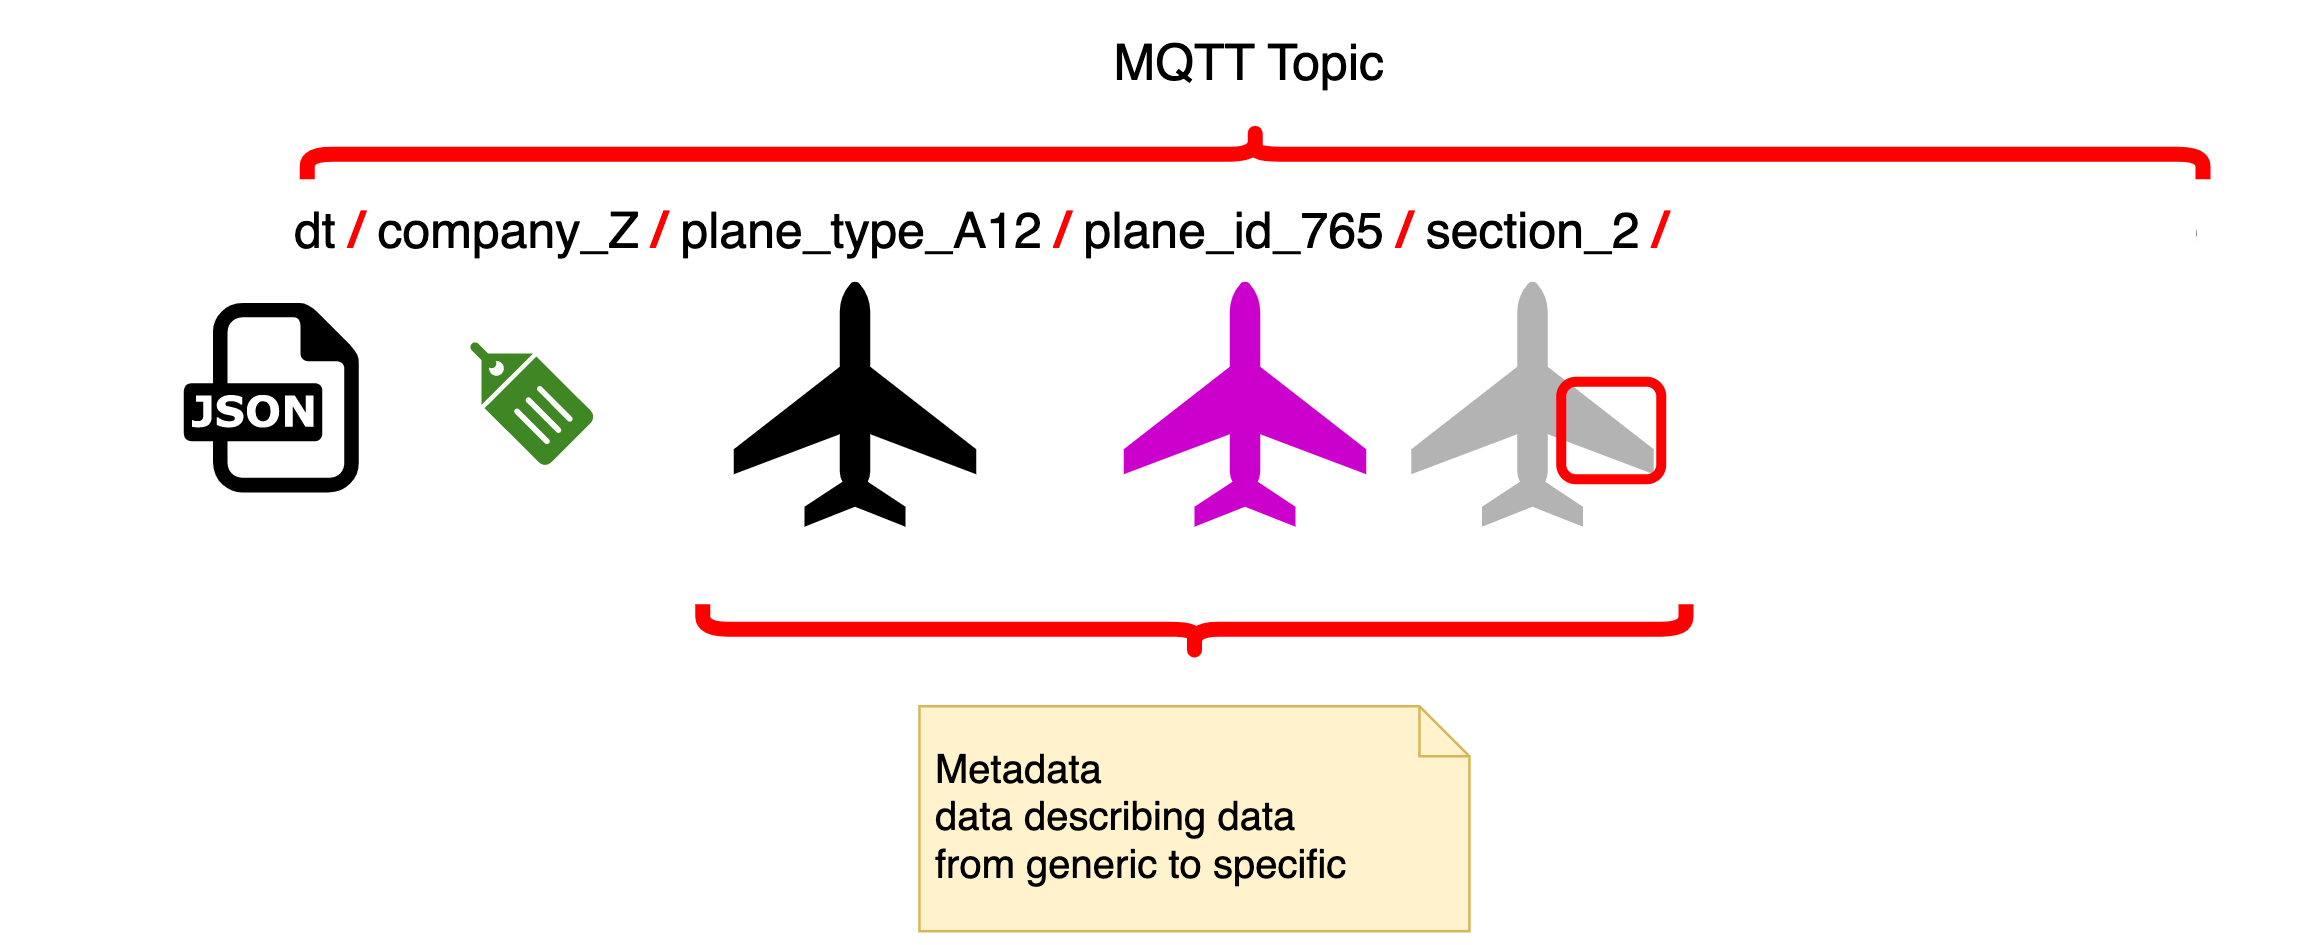 MQTT Topic structure